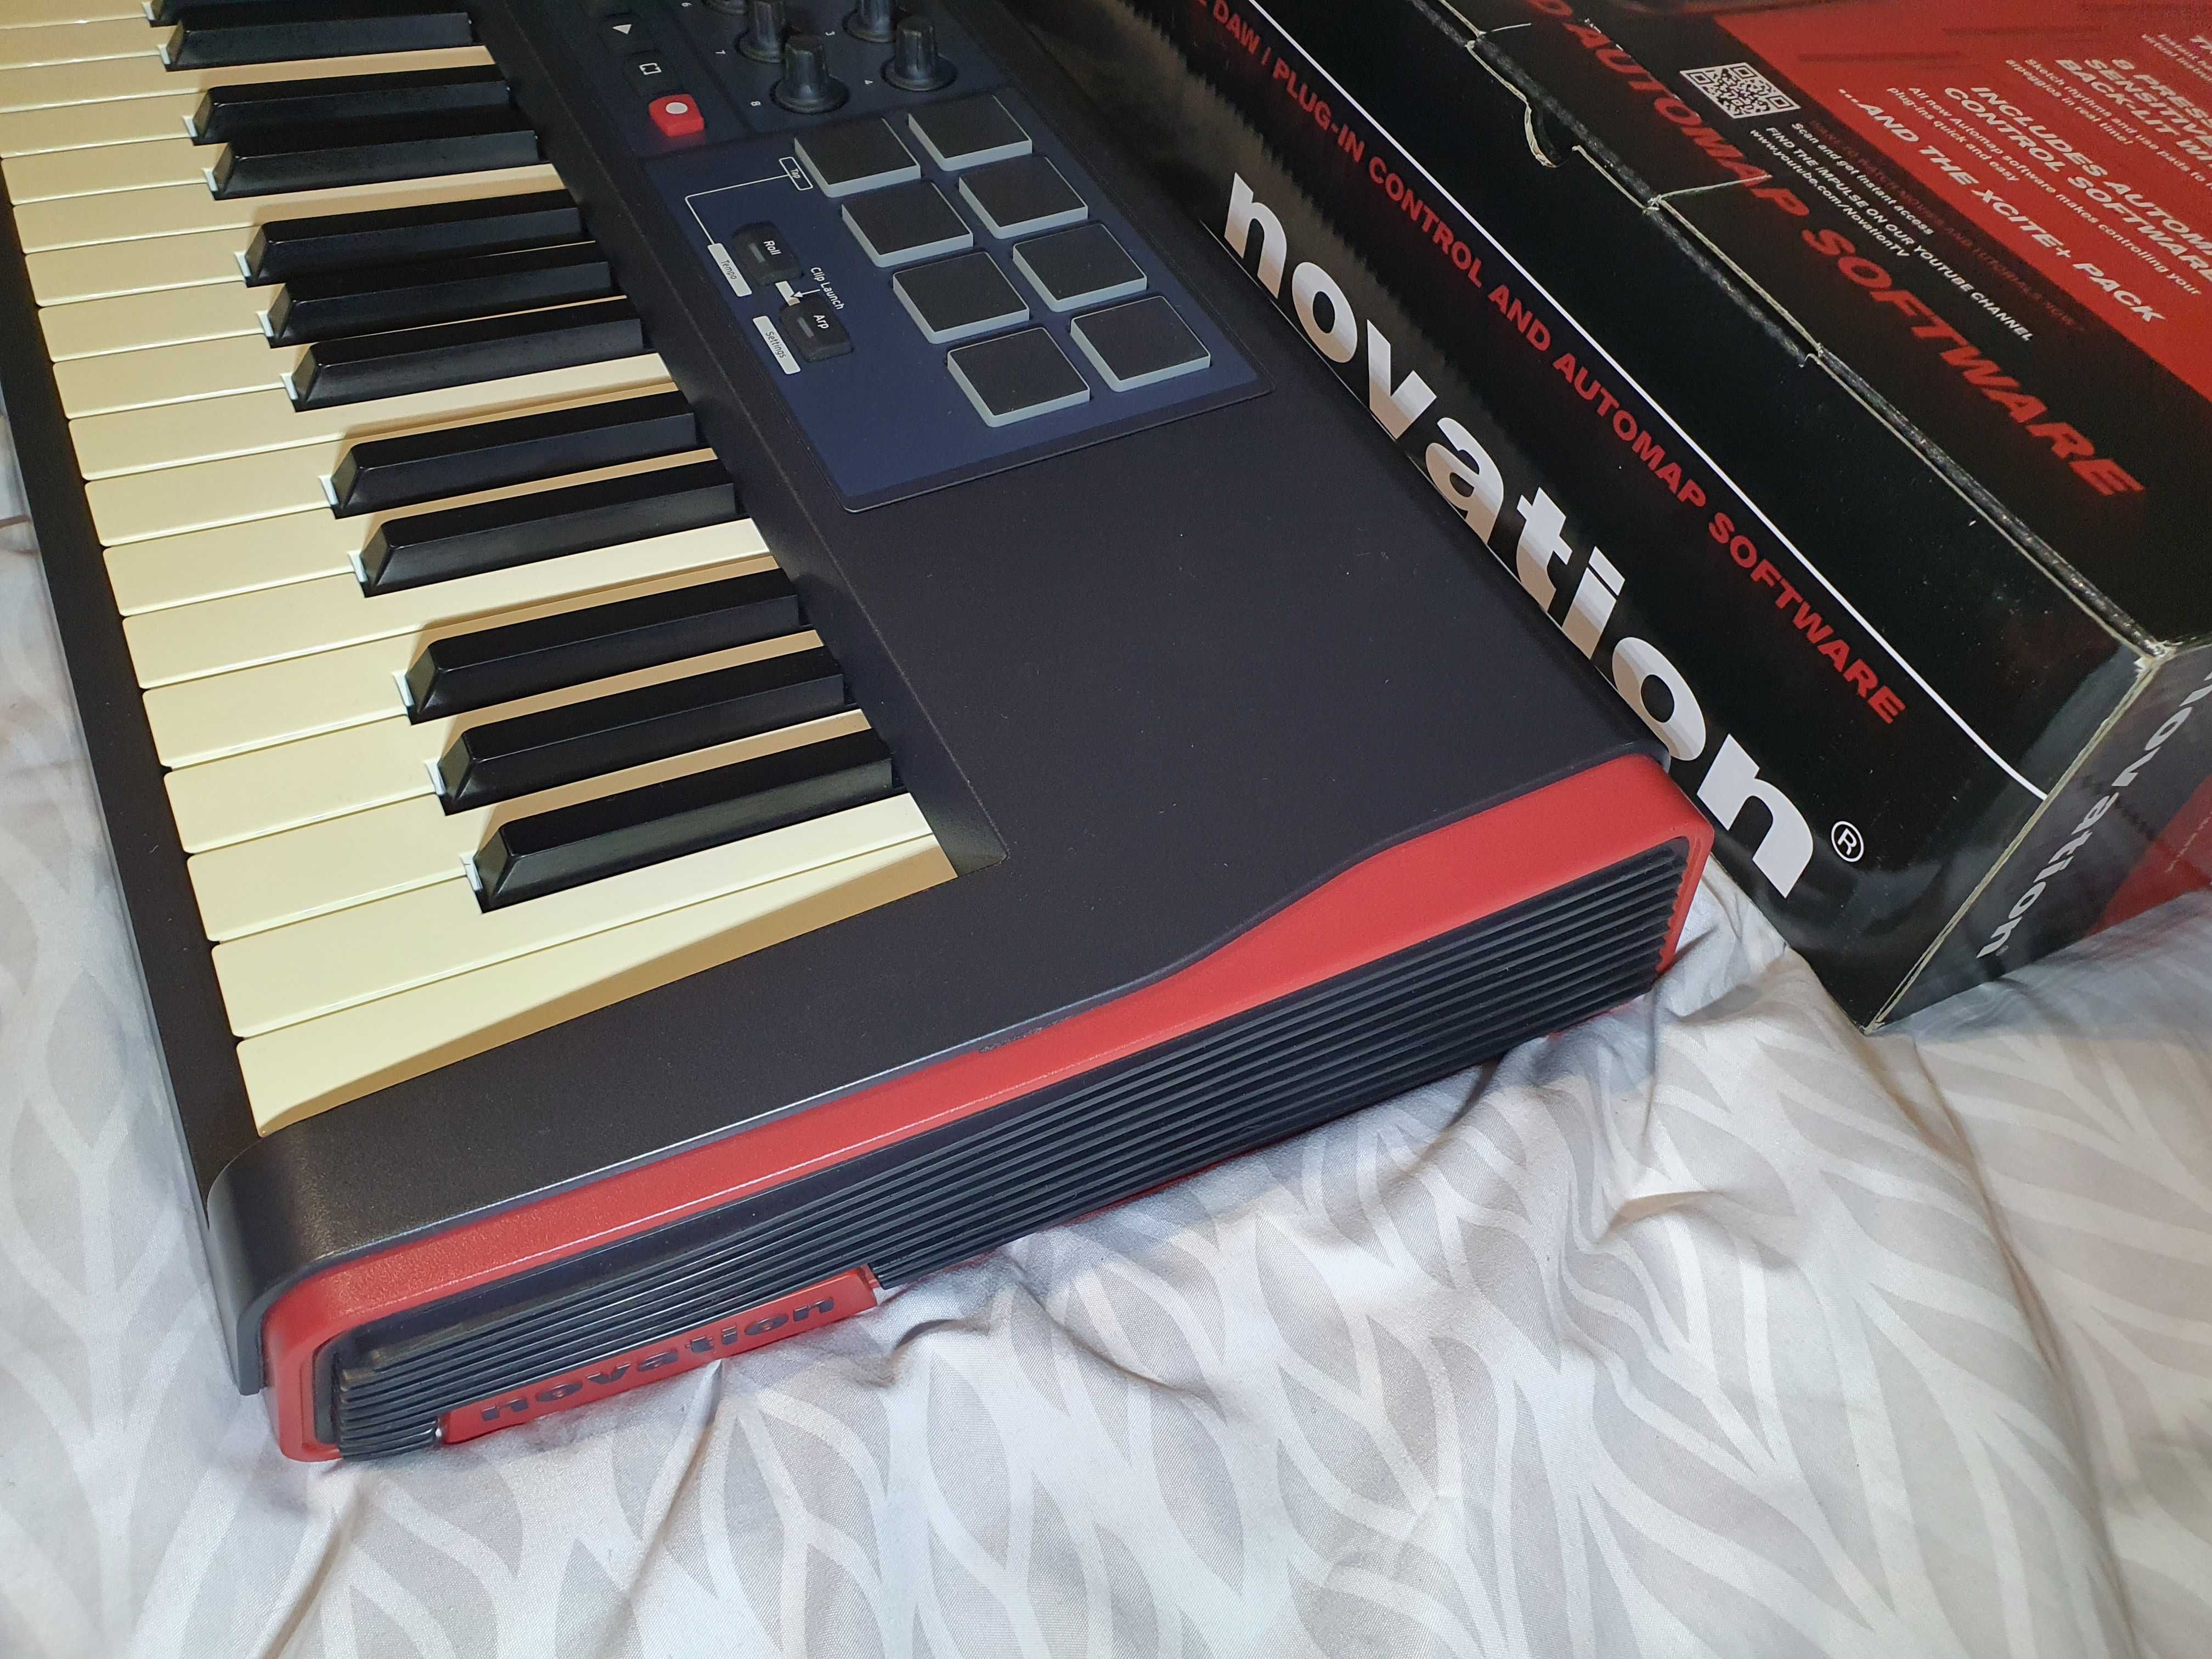 Novation Impulse 61 kontroler daw pianino syntezator do muzyki i nauki